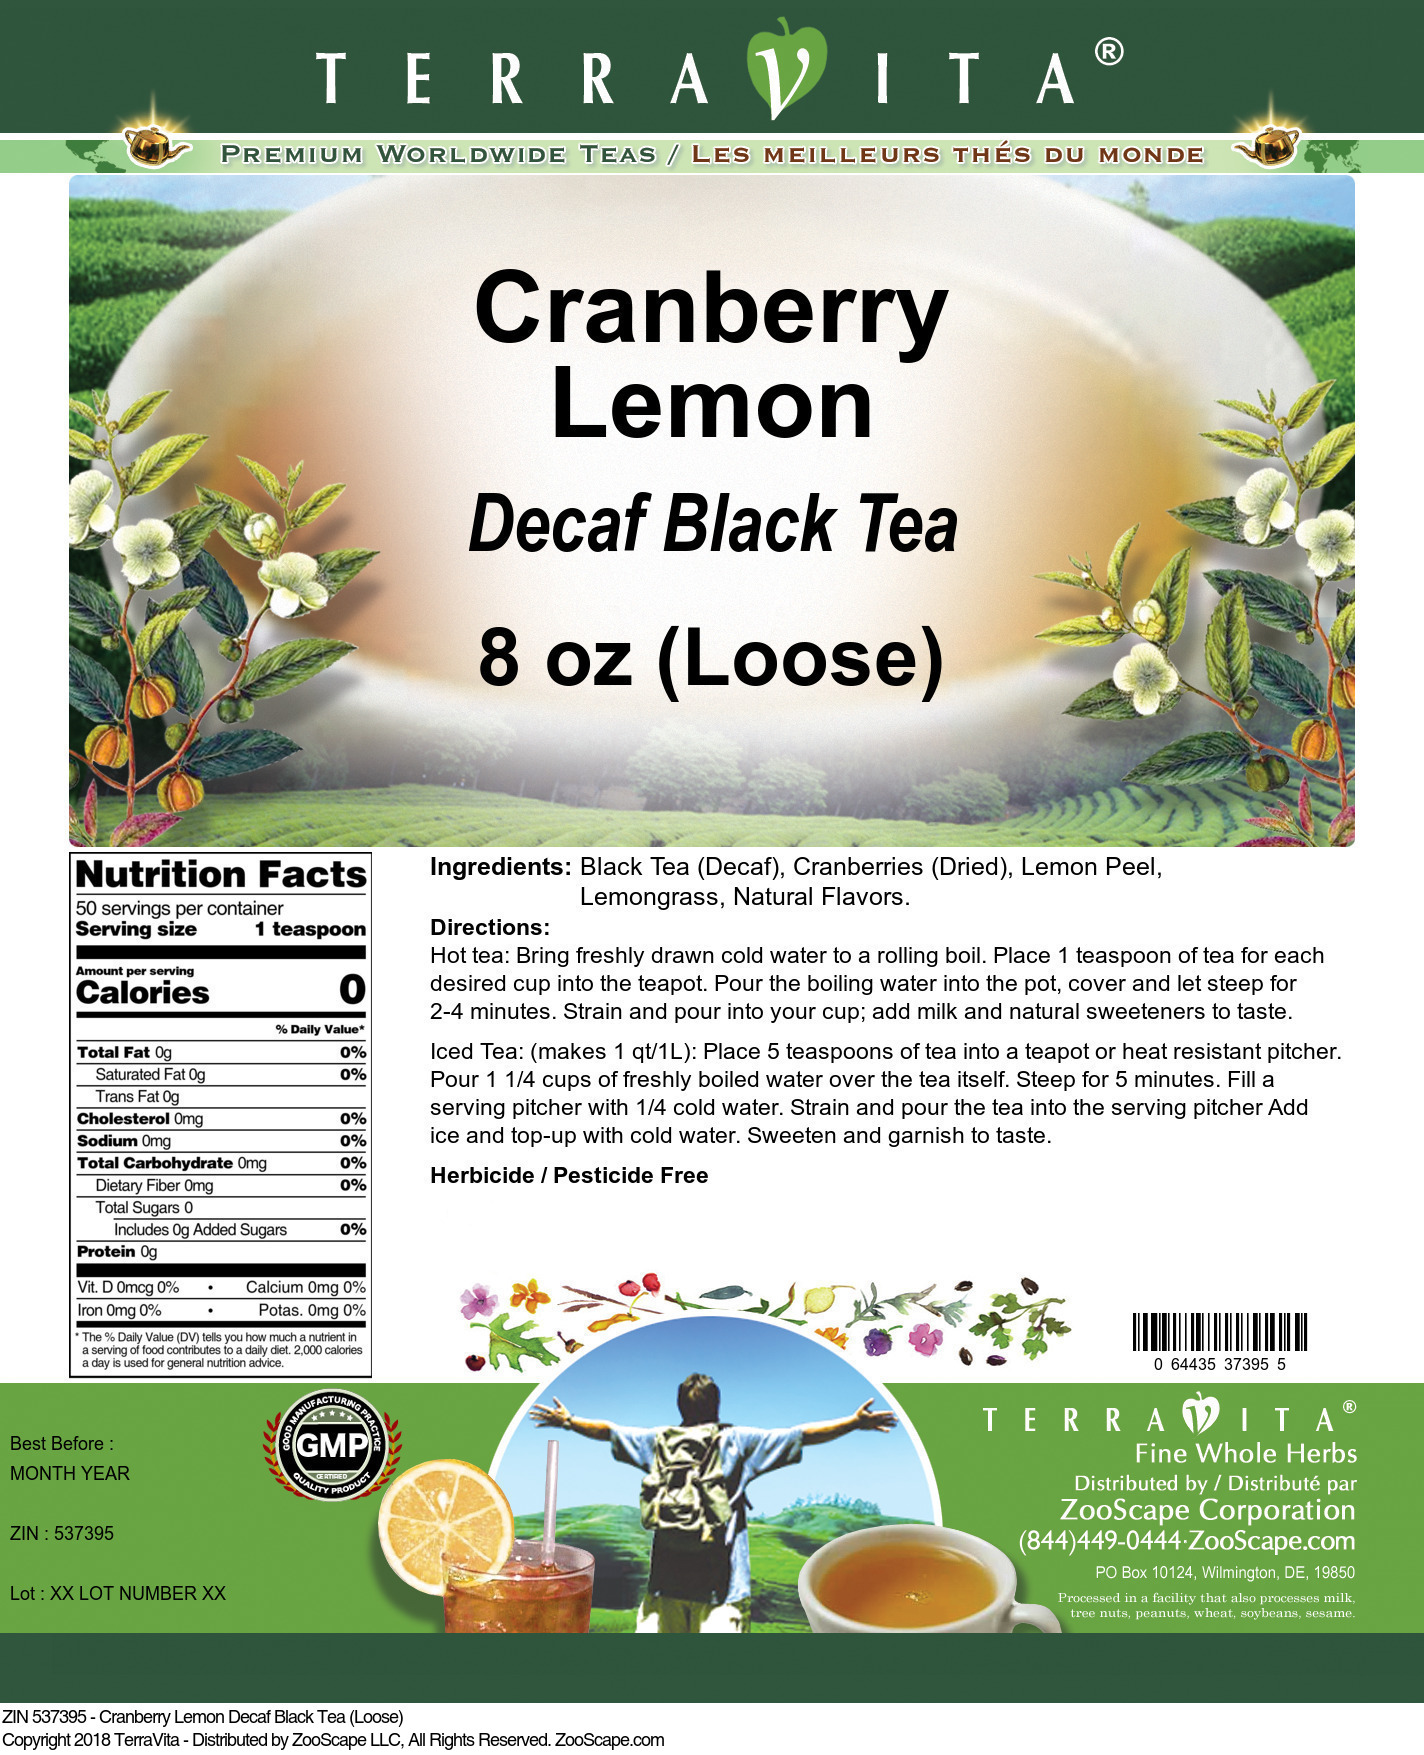 Cranberry Lemon Decaf Black Tea (Loose) - Label